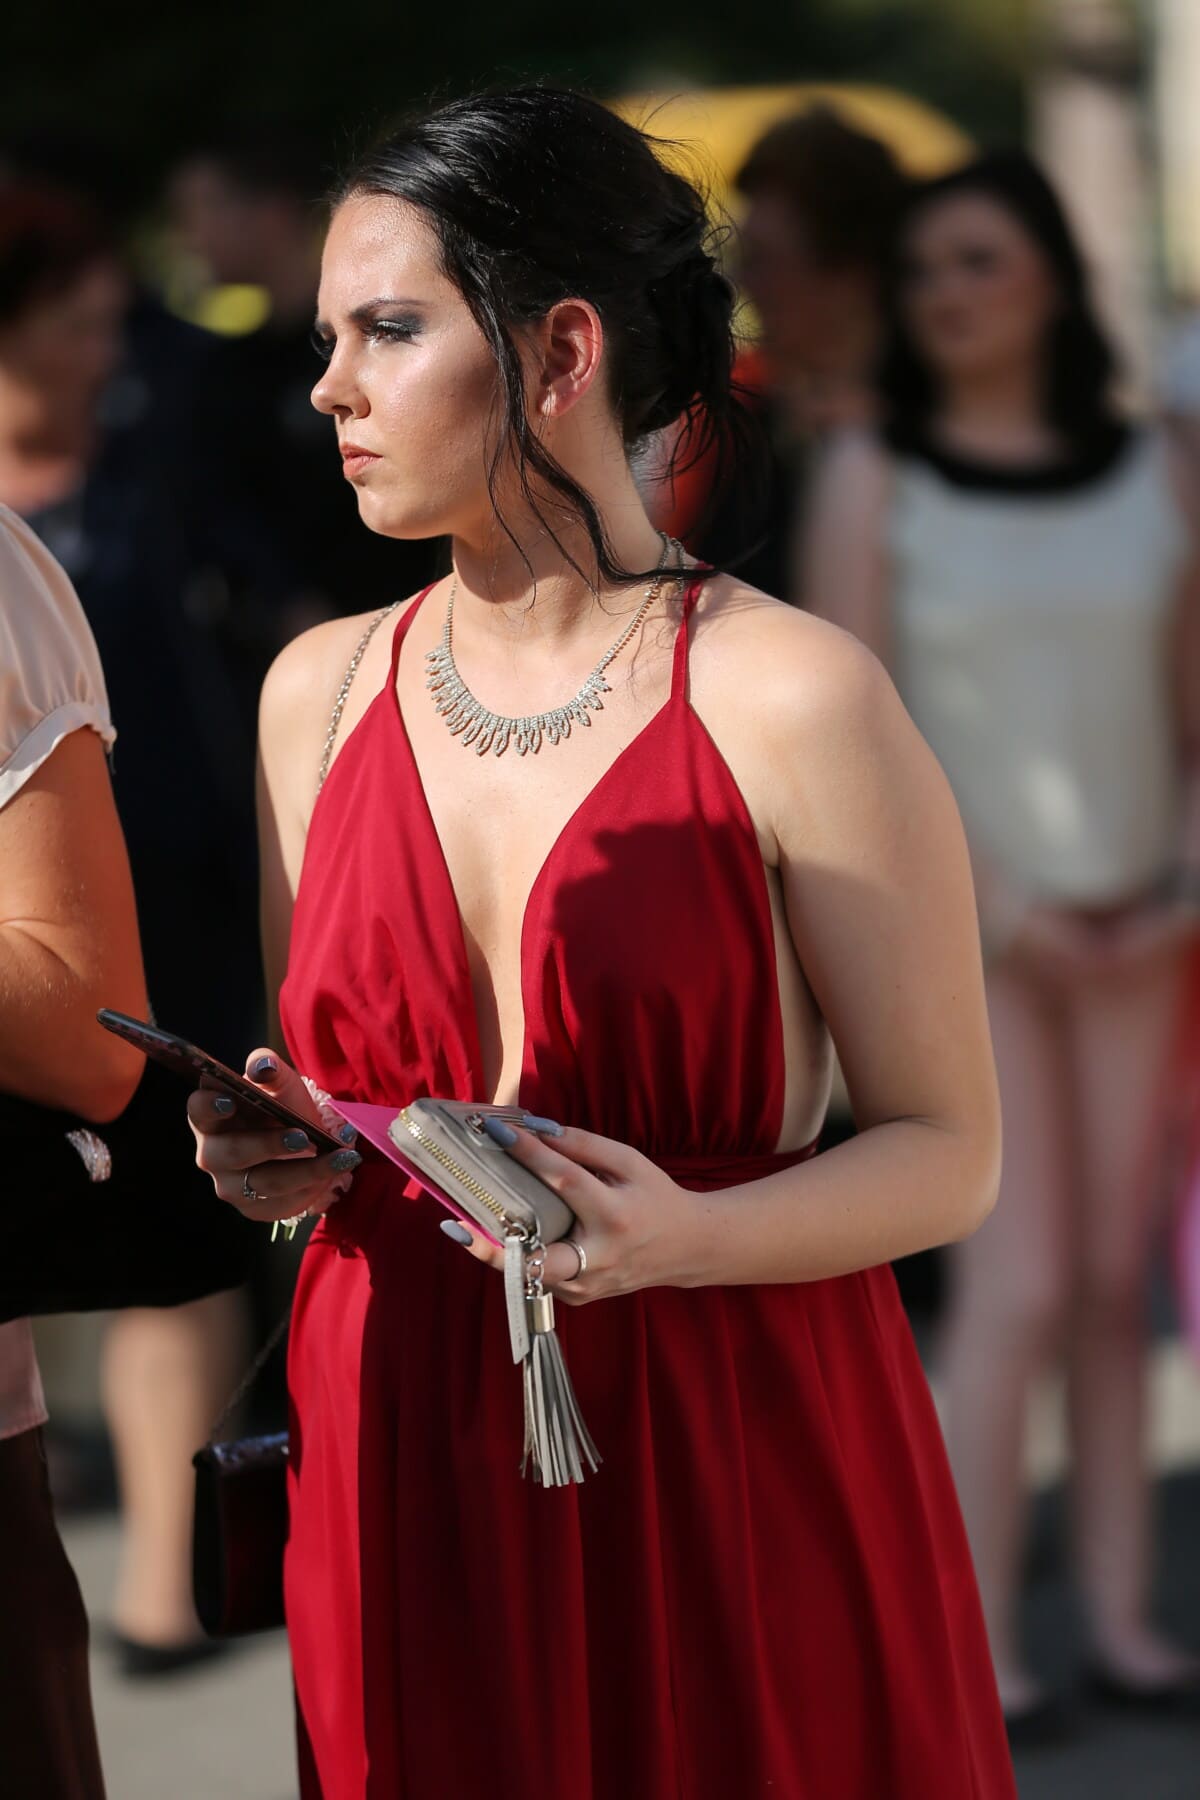 mujer joven, maravilloso, vestido, rojo, bolso, teléfono móvil, persona, moda, mujer, personas